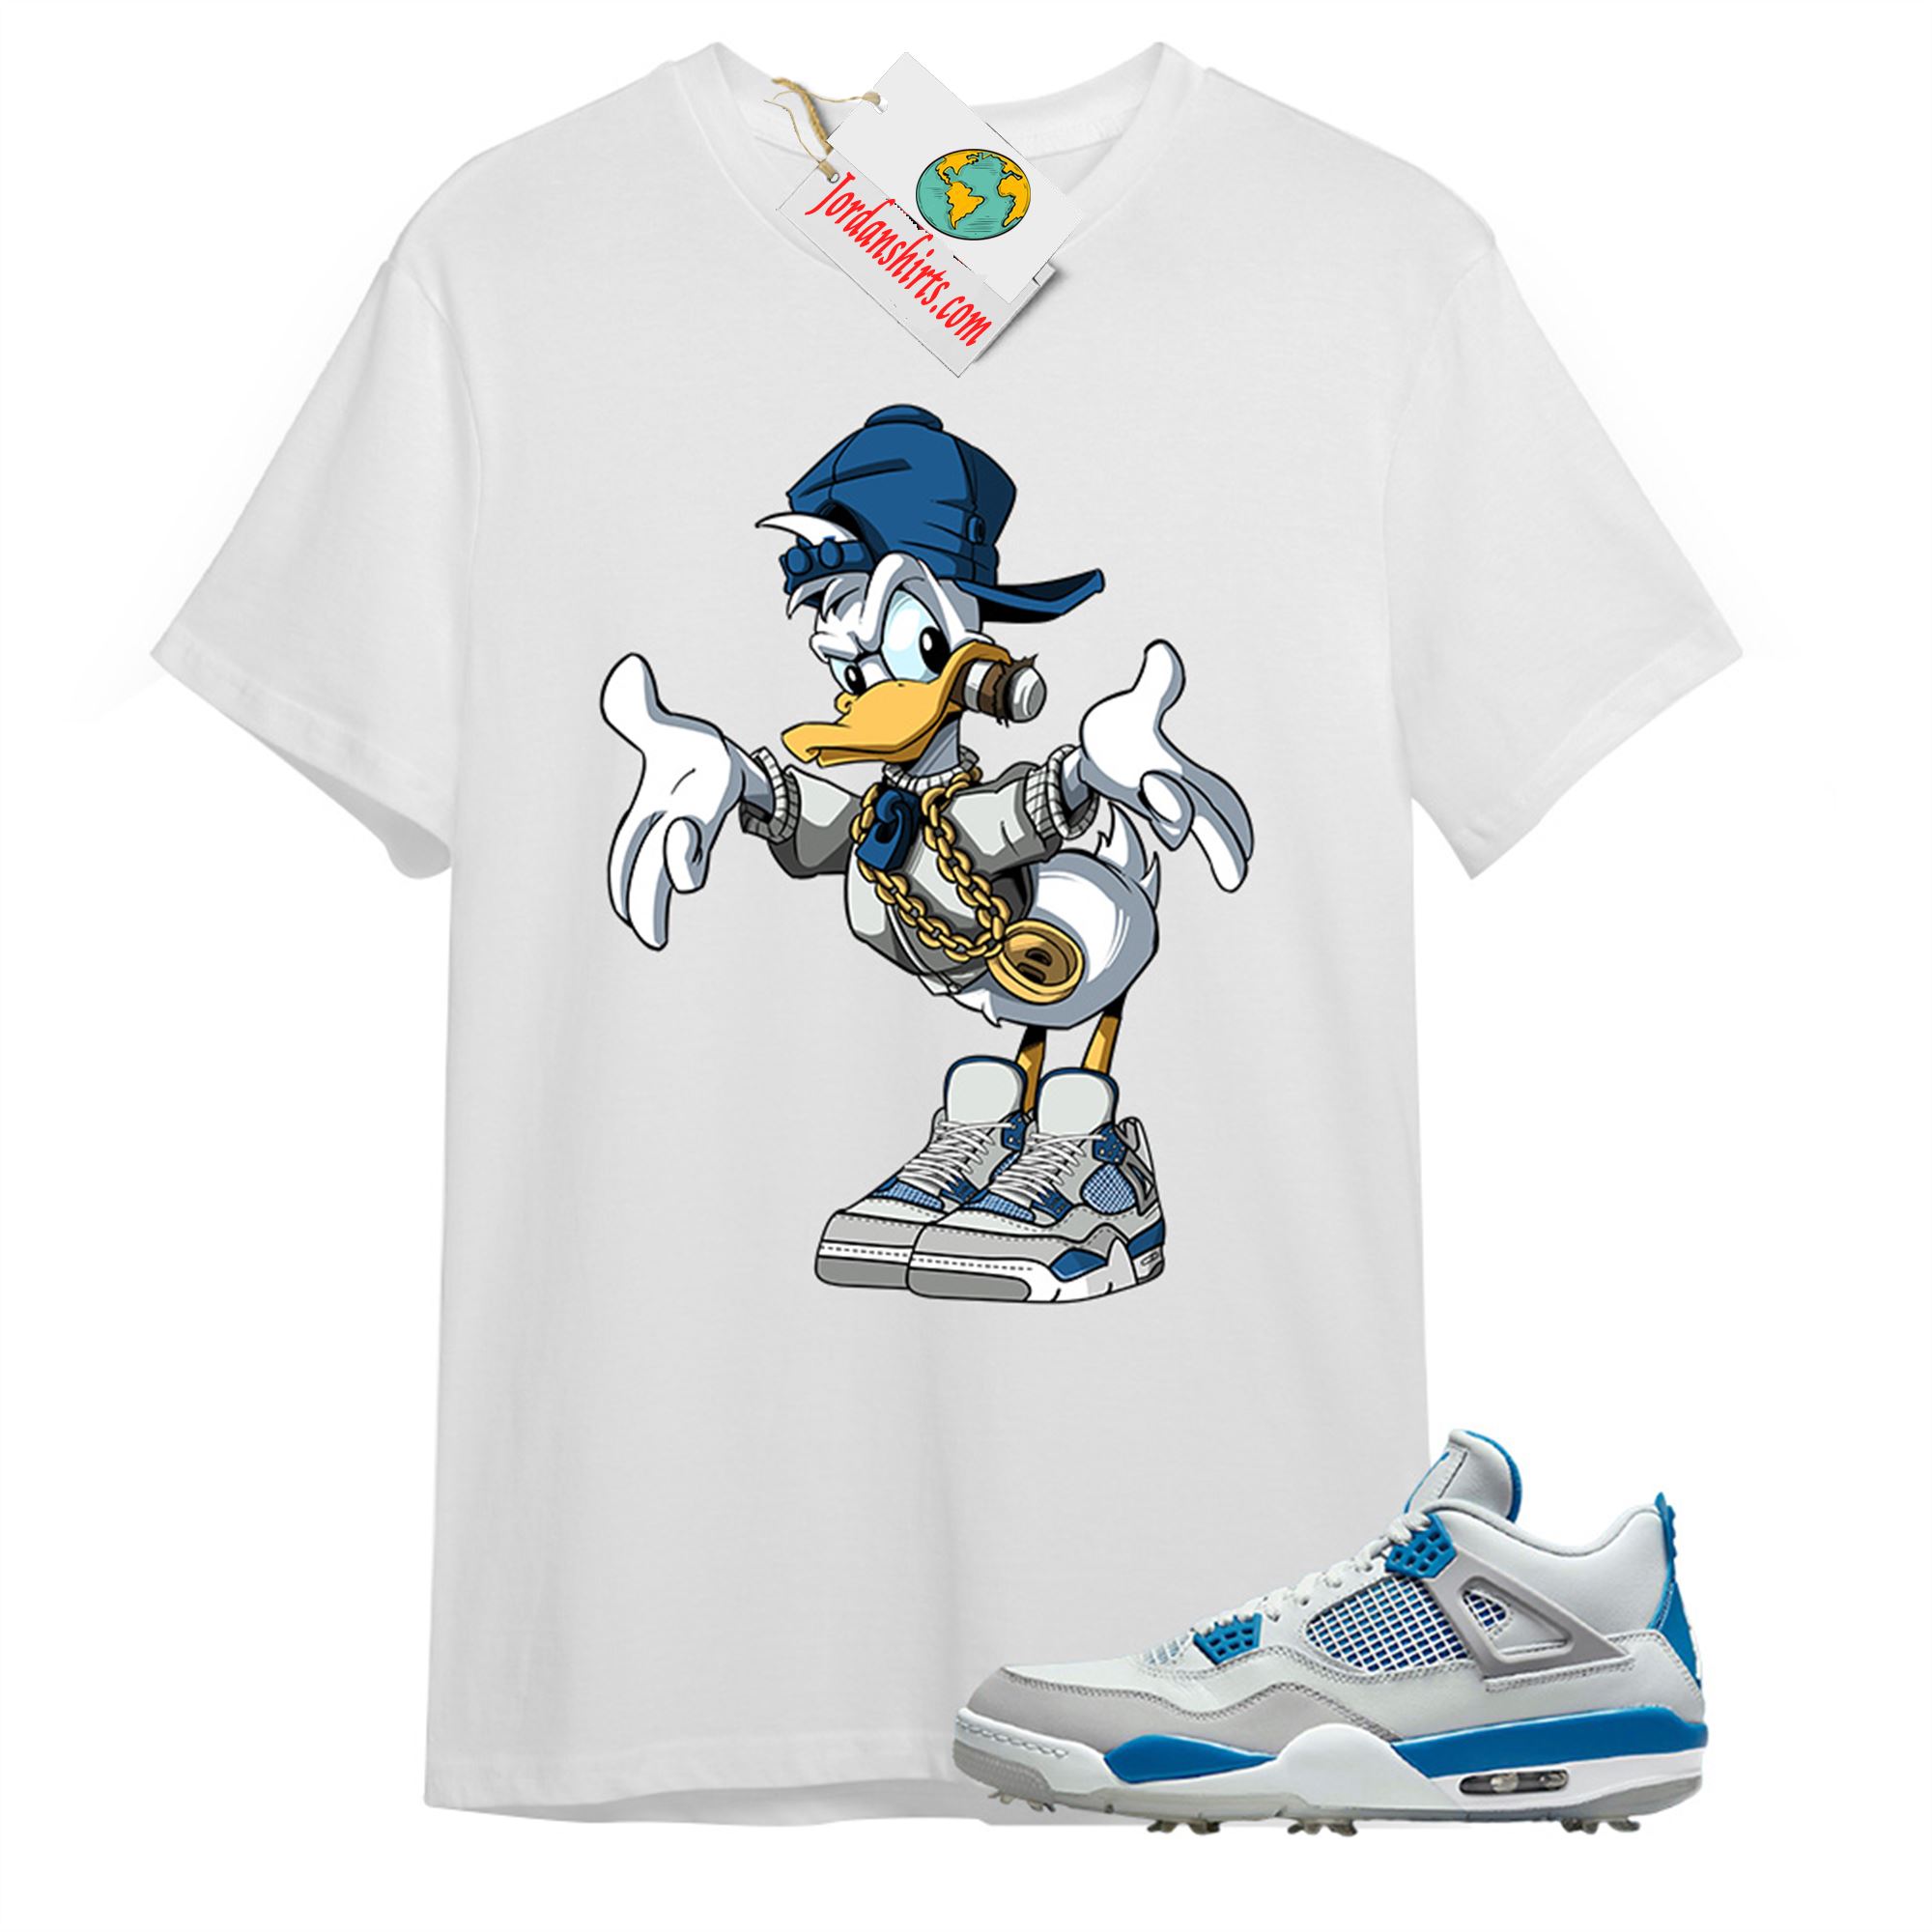 Jordan 4 Shirt, Donald Duck White T-shirt Air Jordan 4 Golf Military Blue 4s Plus Size Up To 5xl